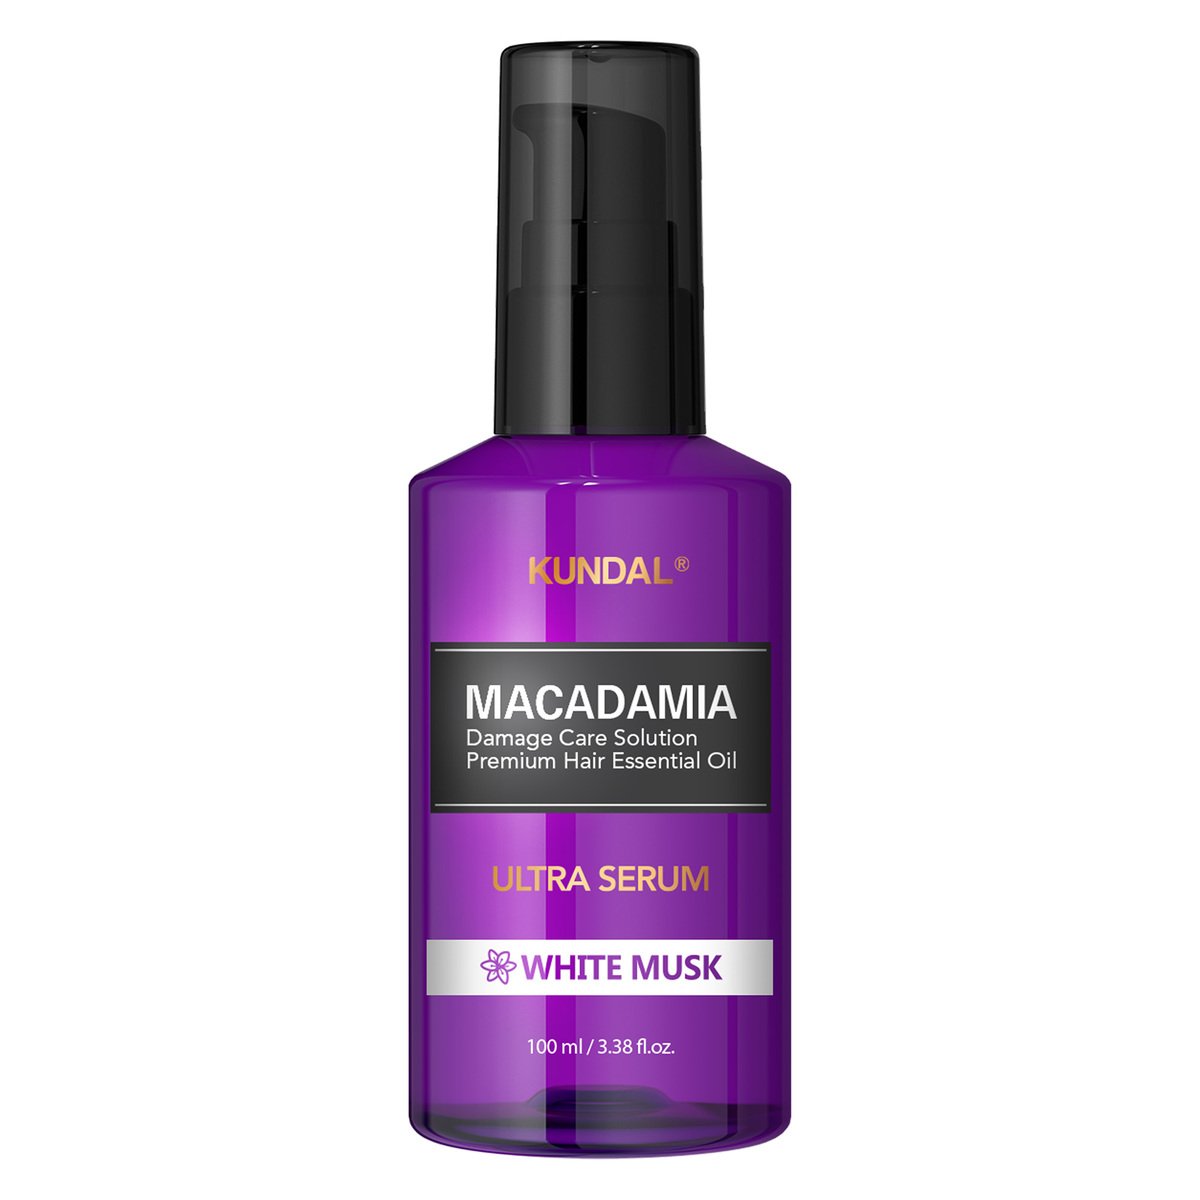 Kundal Macadamia Ultra Serum White Musk Hair Essential Oil 100 ml